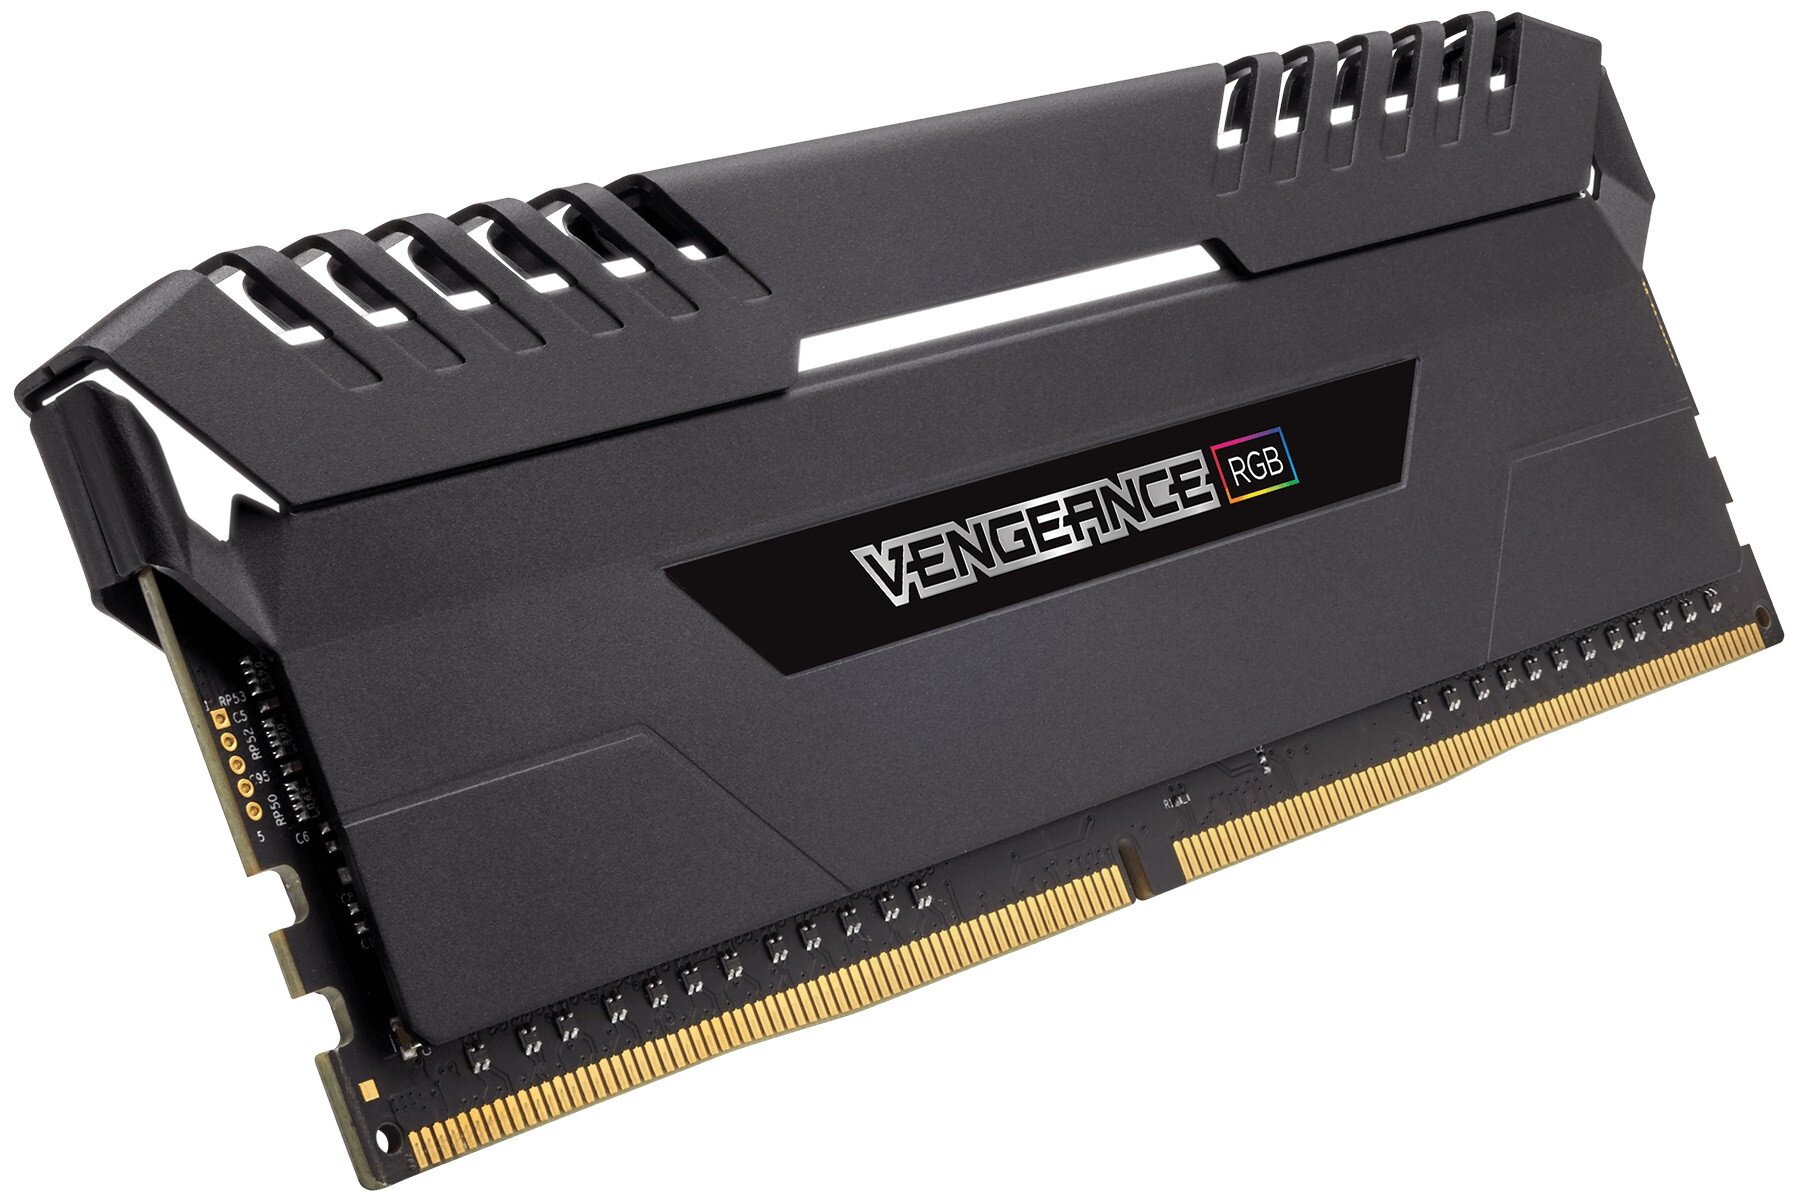 Corsair Vengeance RGB 16GB (2 x 8GB) DDR4 DRAM 3200MHz C16 Memory Kit